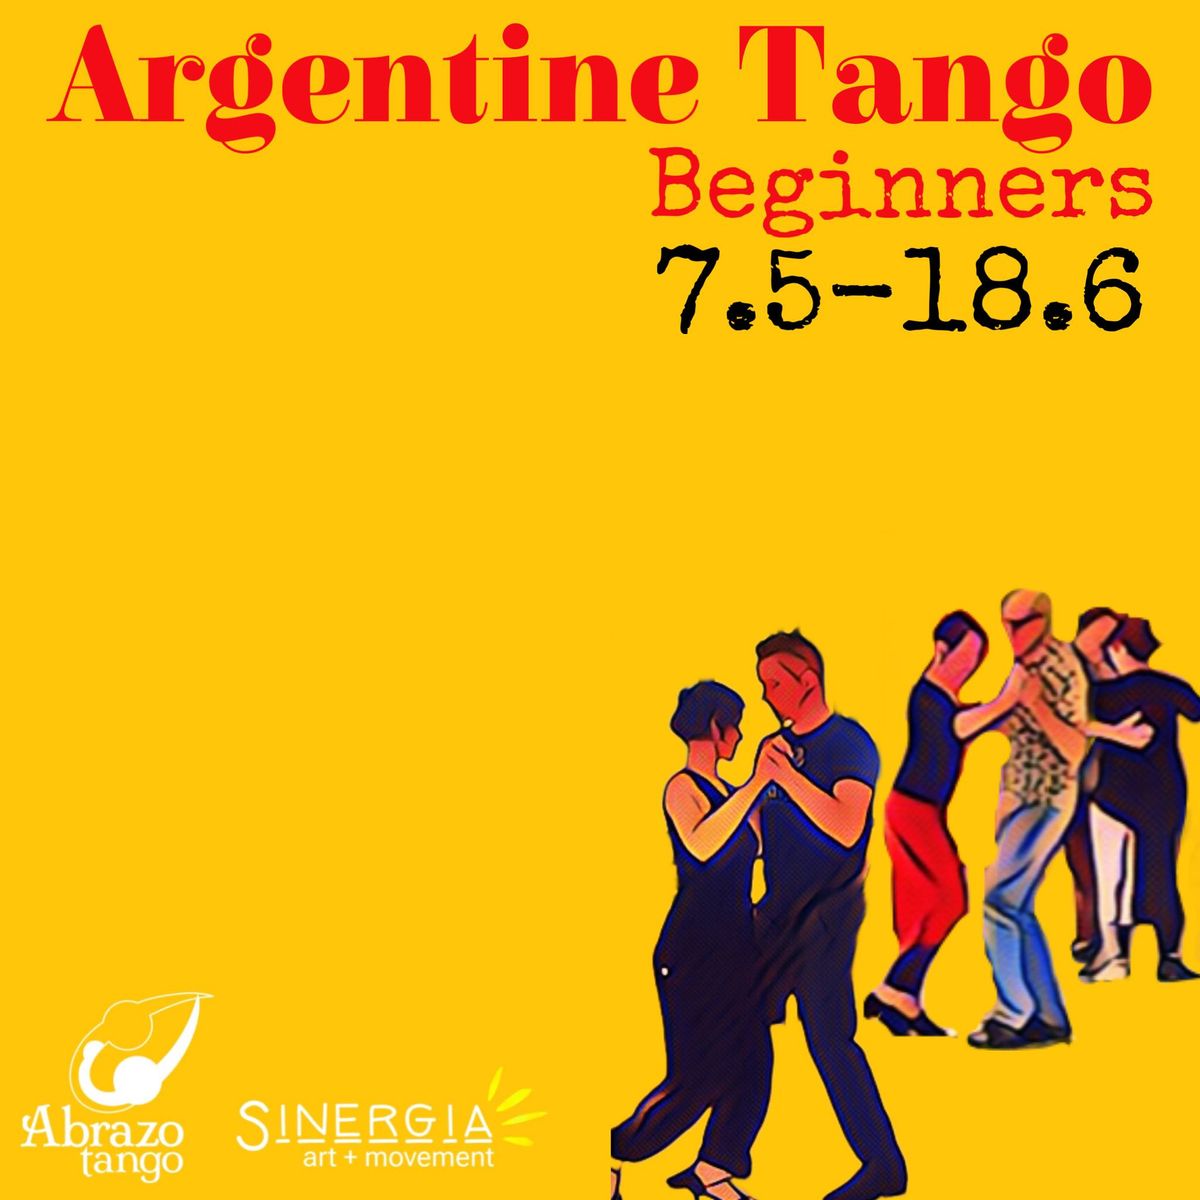 Argentine Tango Beginners - Last course of the season!